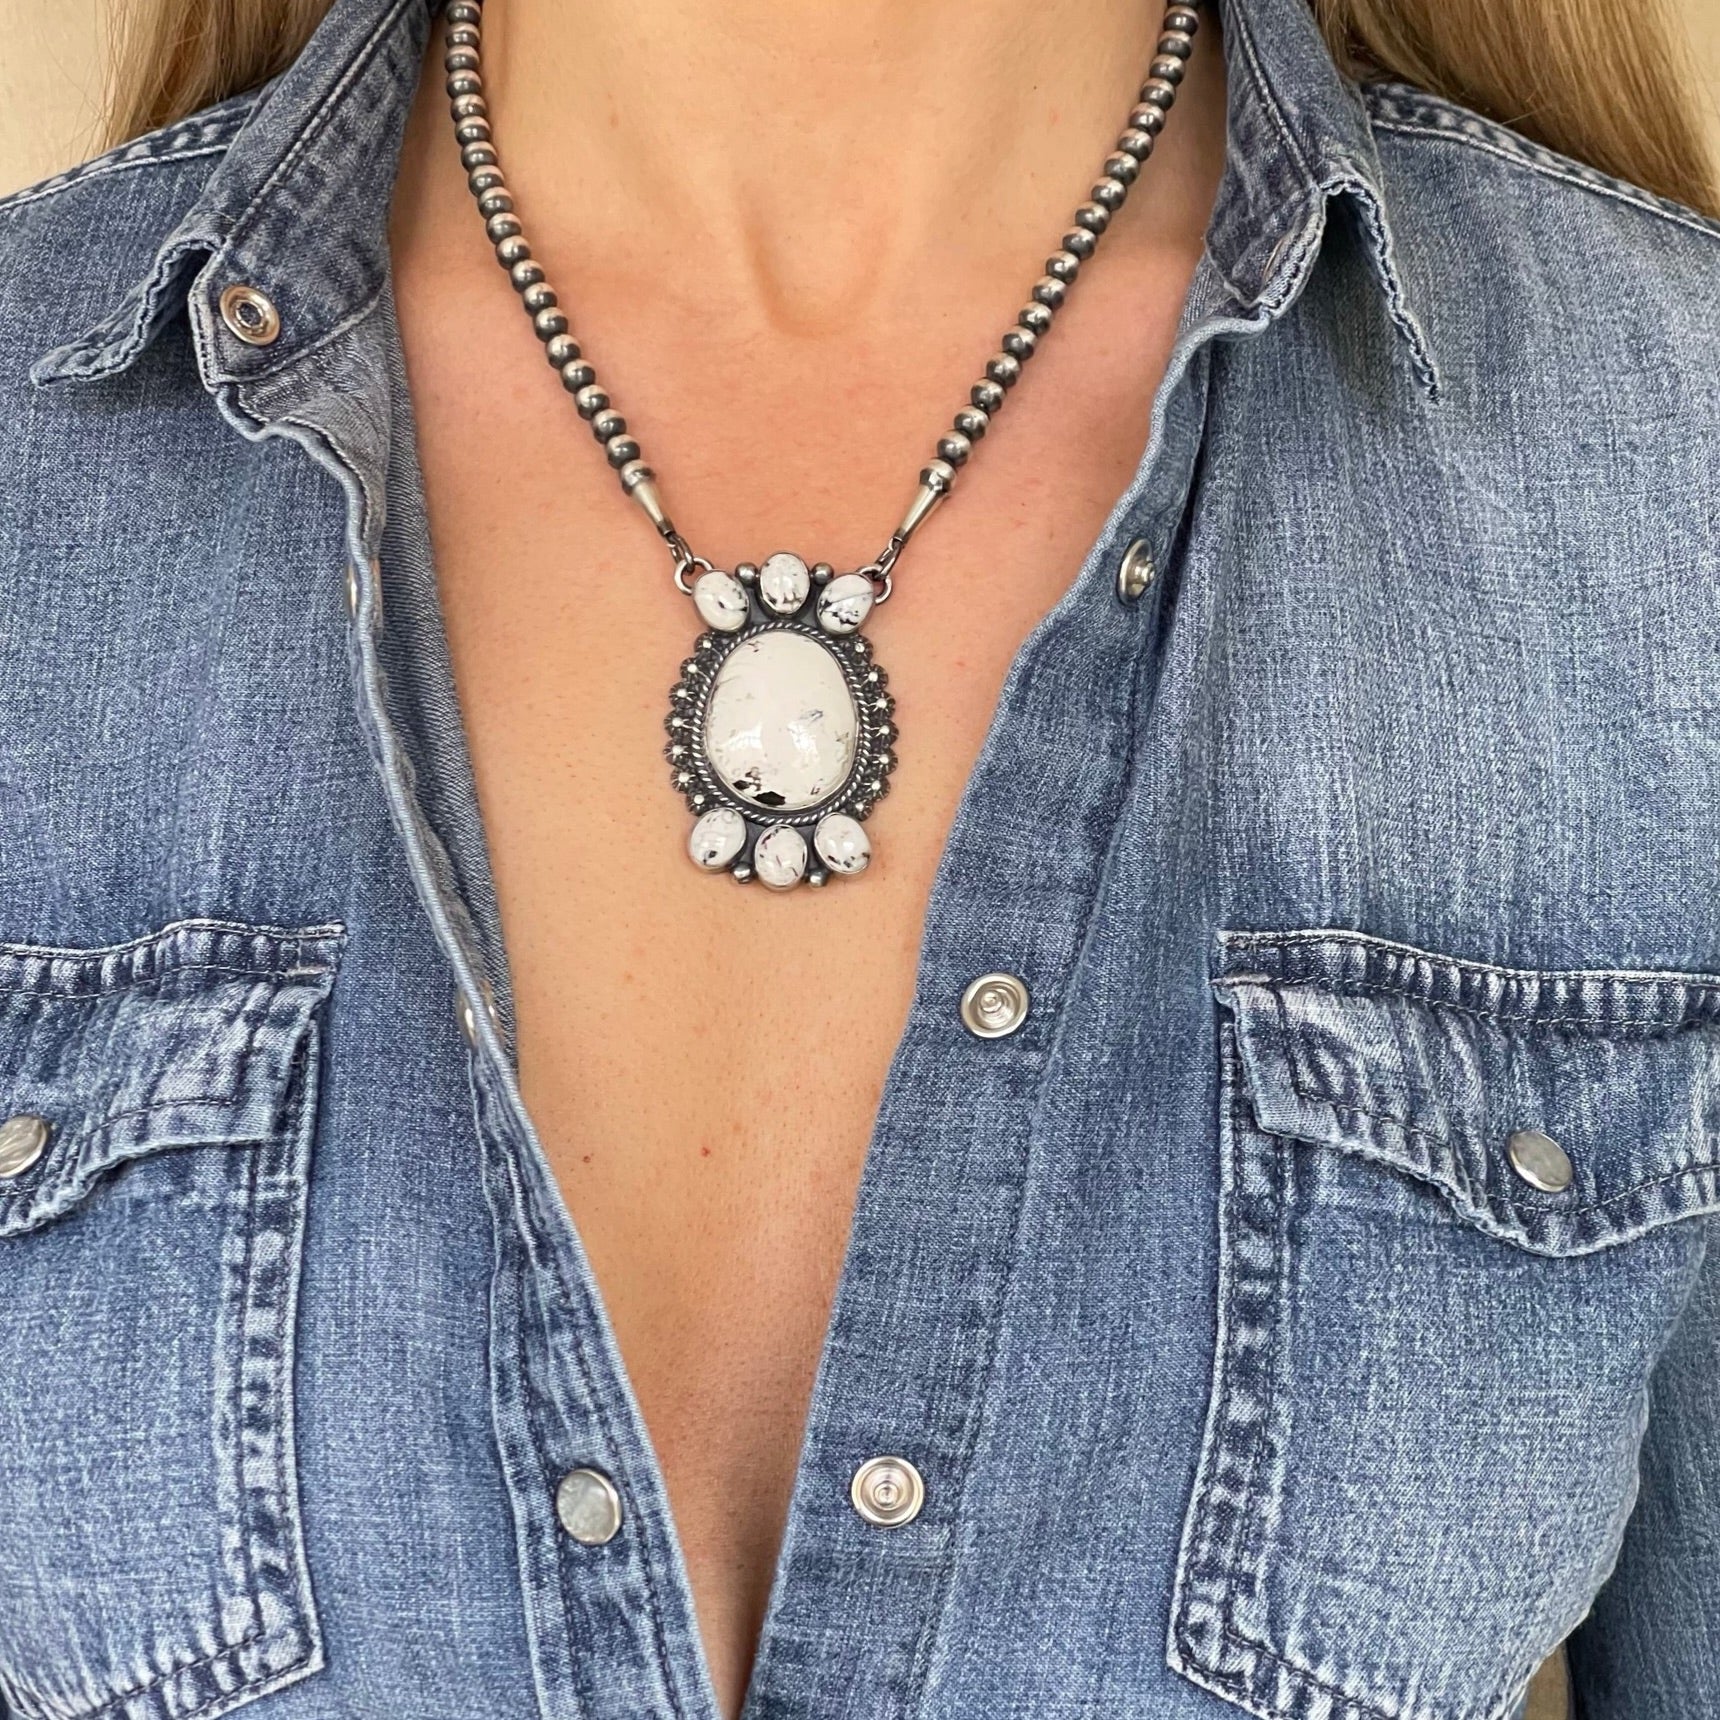 White Buffalo Turquoise Jewelry: Native American Treasures by LomaSiiva